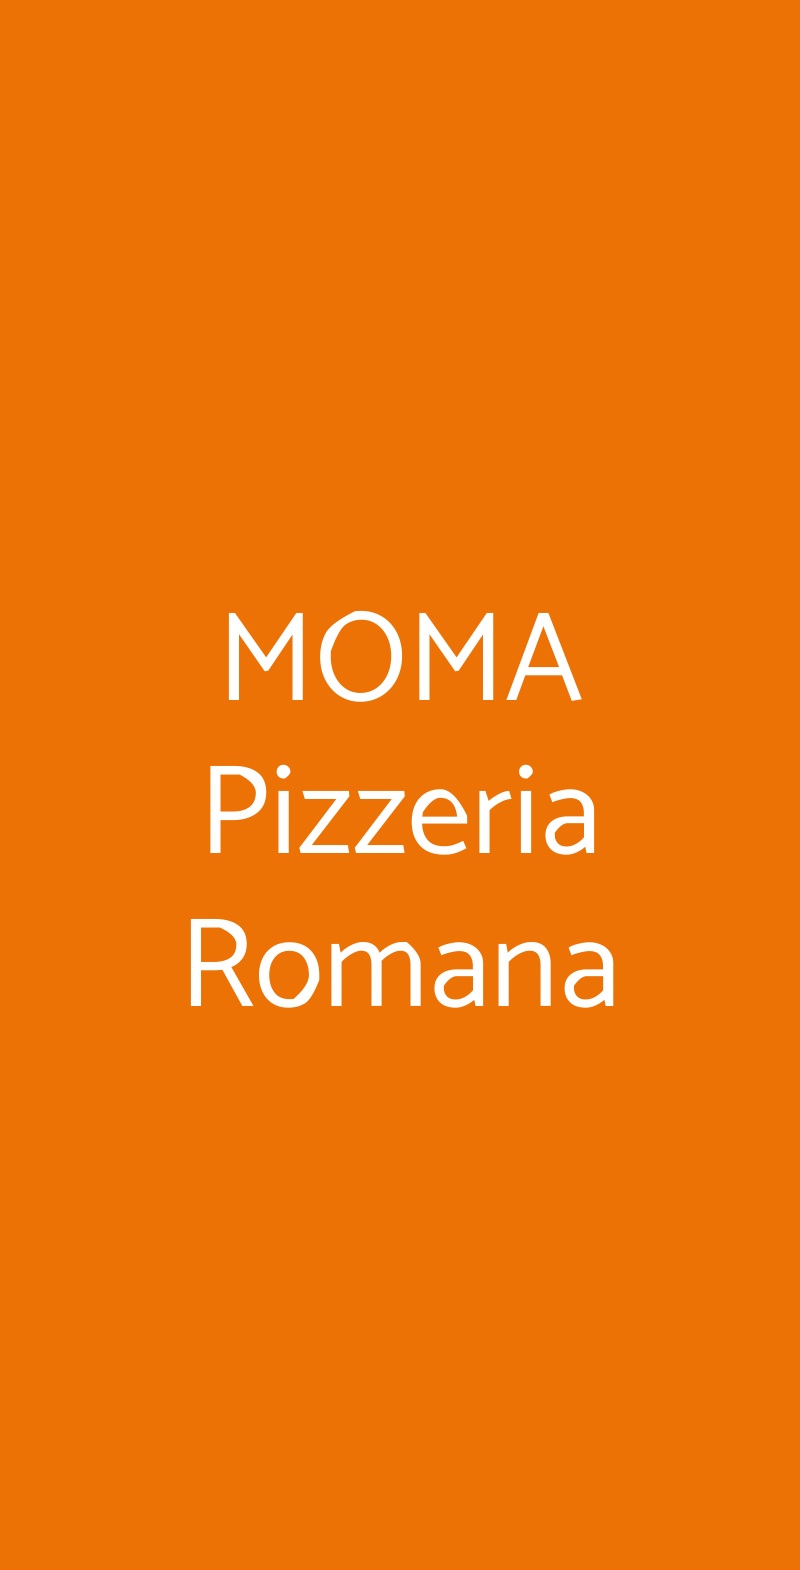 MOMA Pizzeria Romana Roma menù 1 pagina